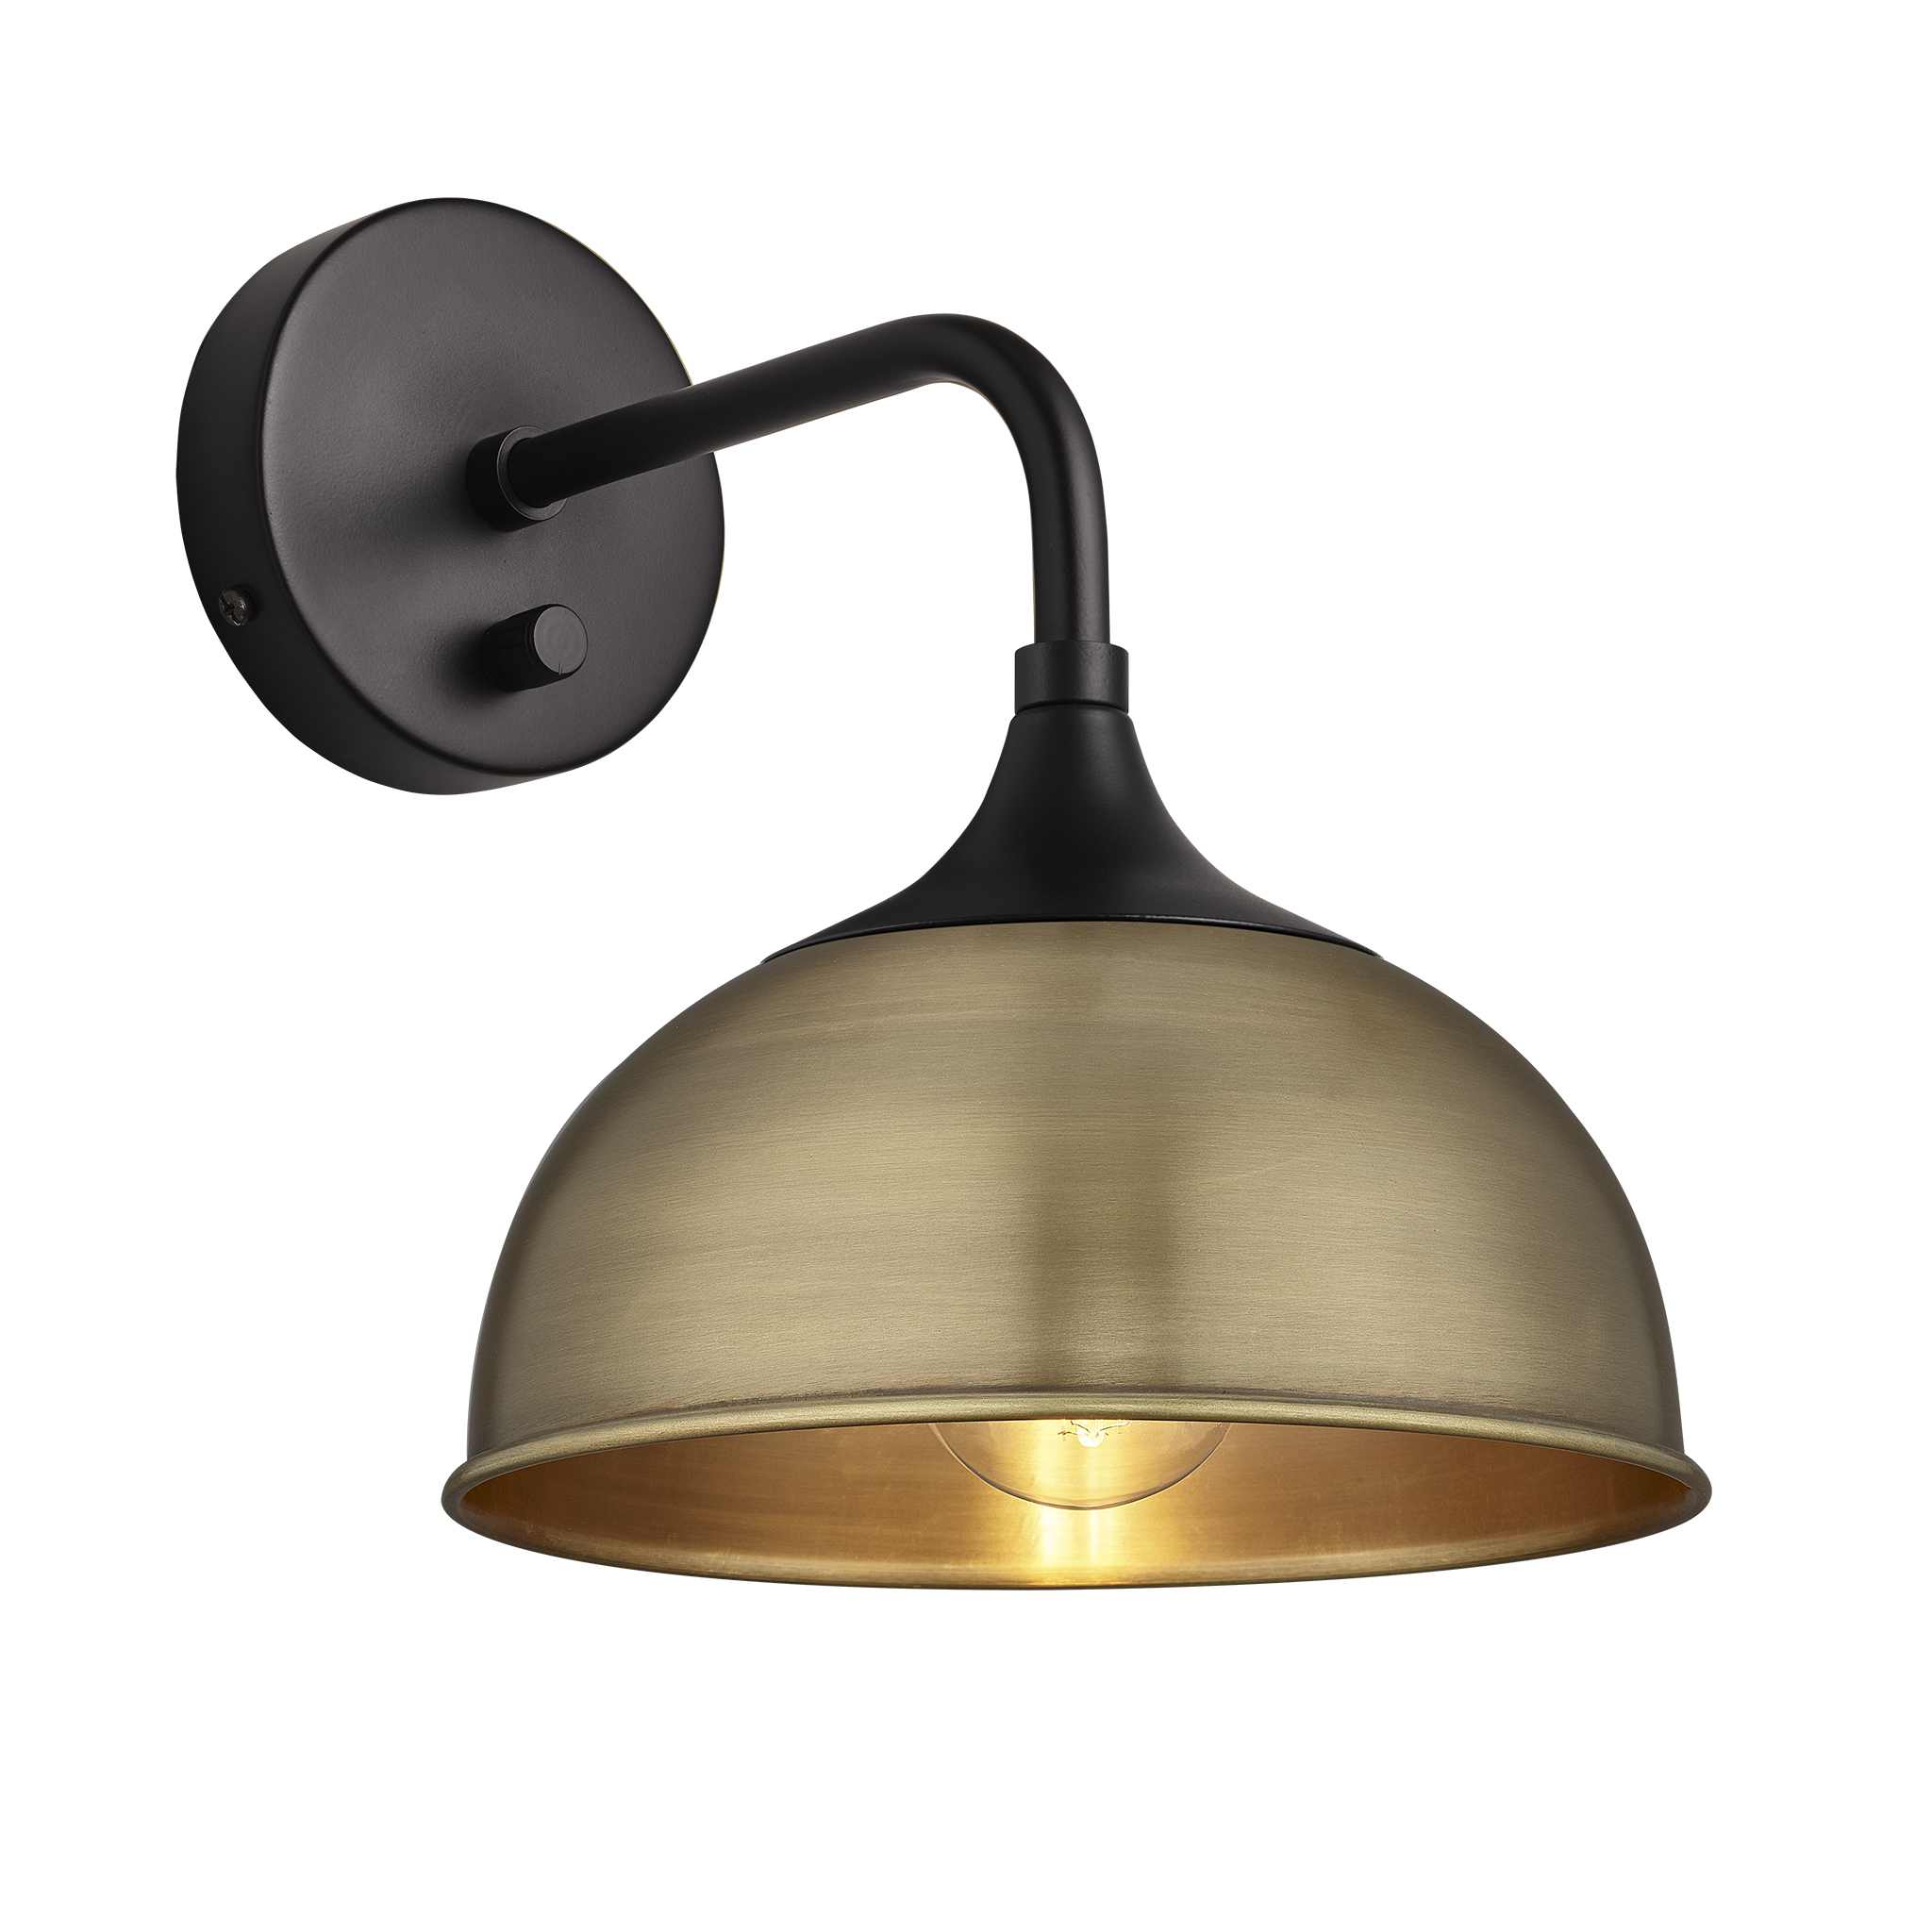  Chelsea Dome Wall Light - 8 Inch - Brass - Black Holder